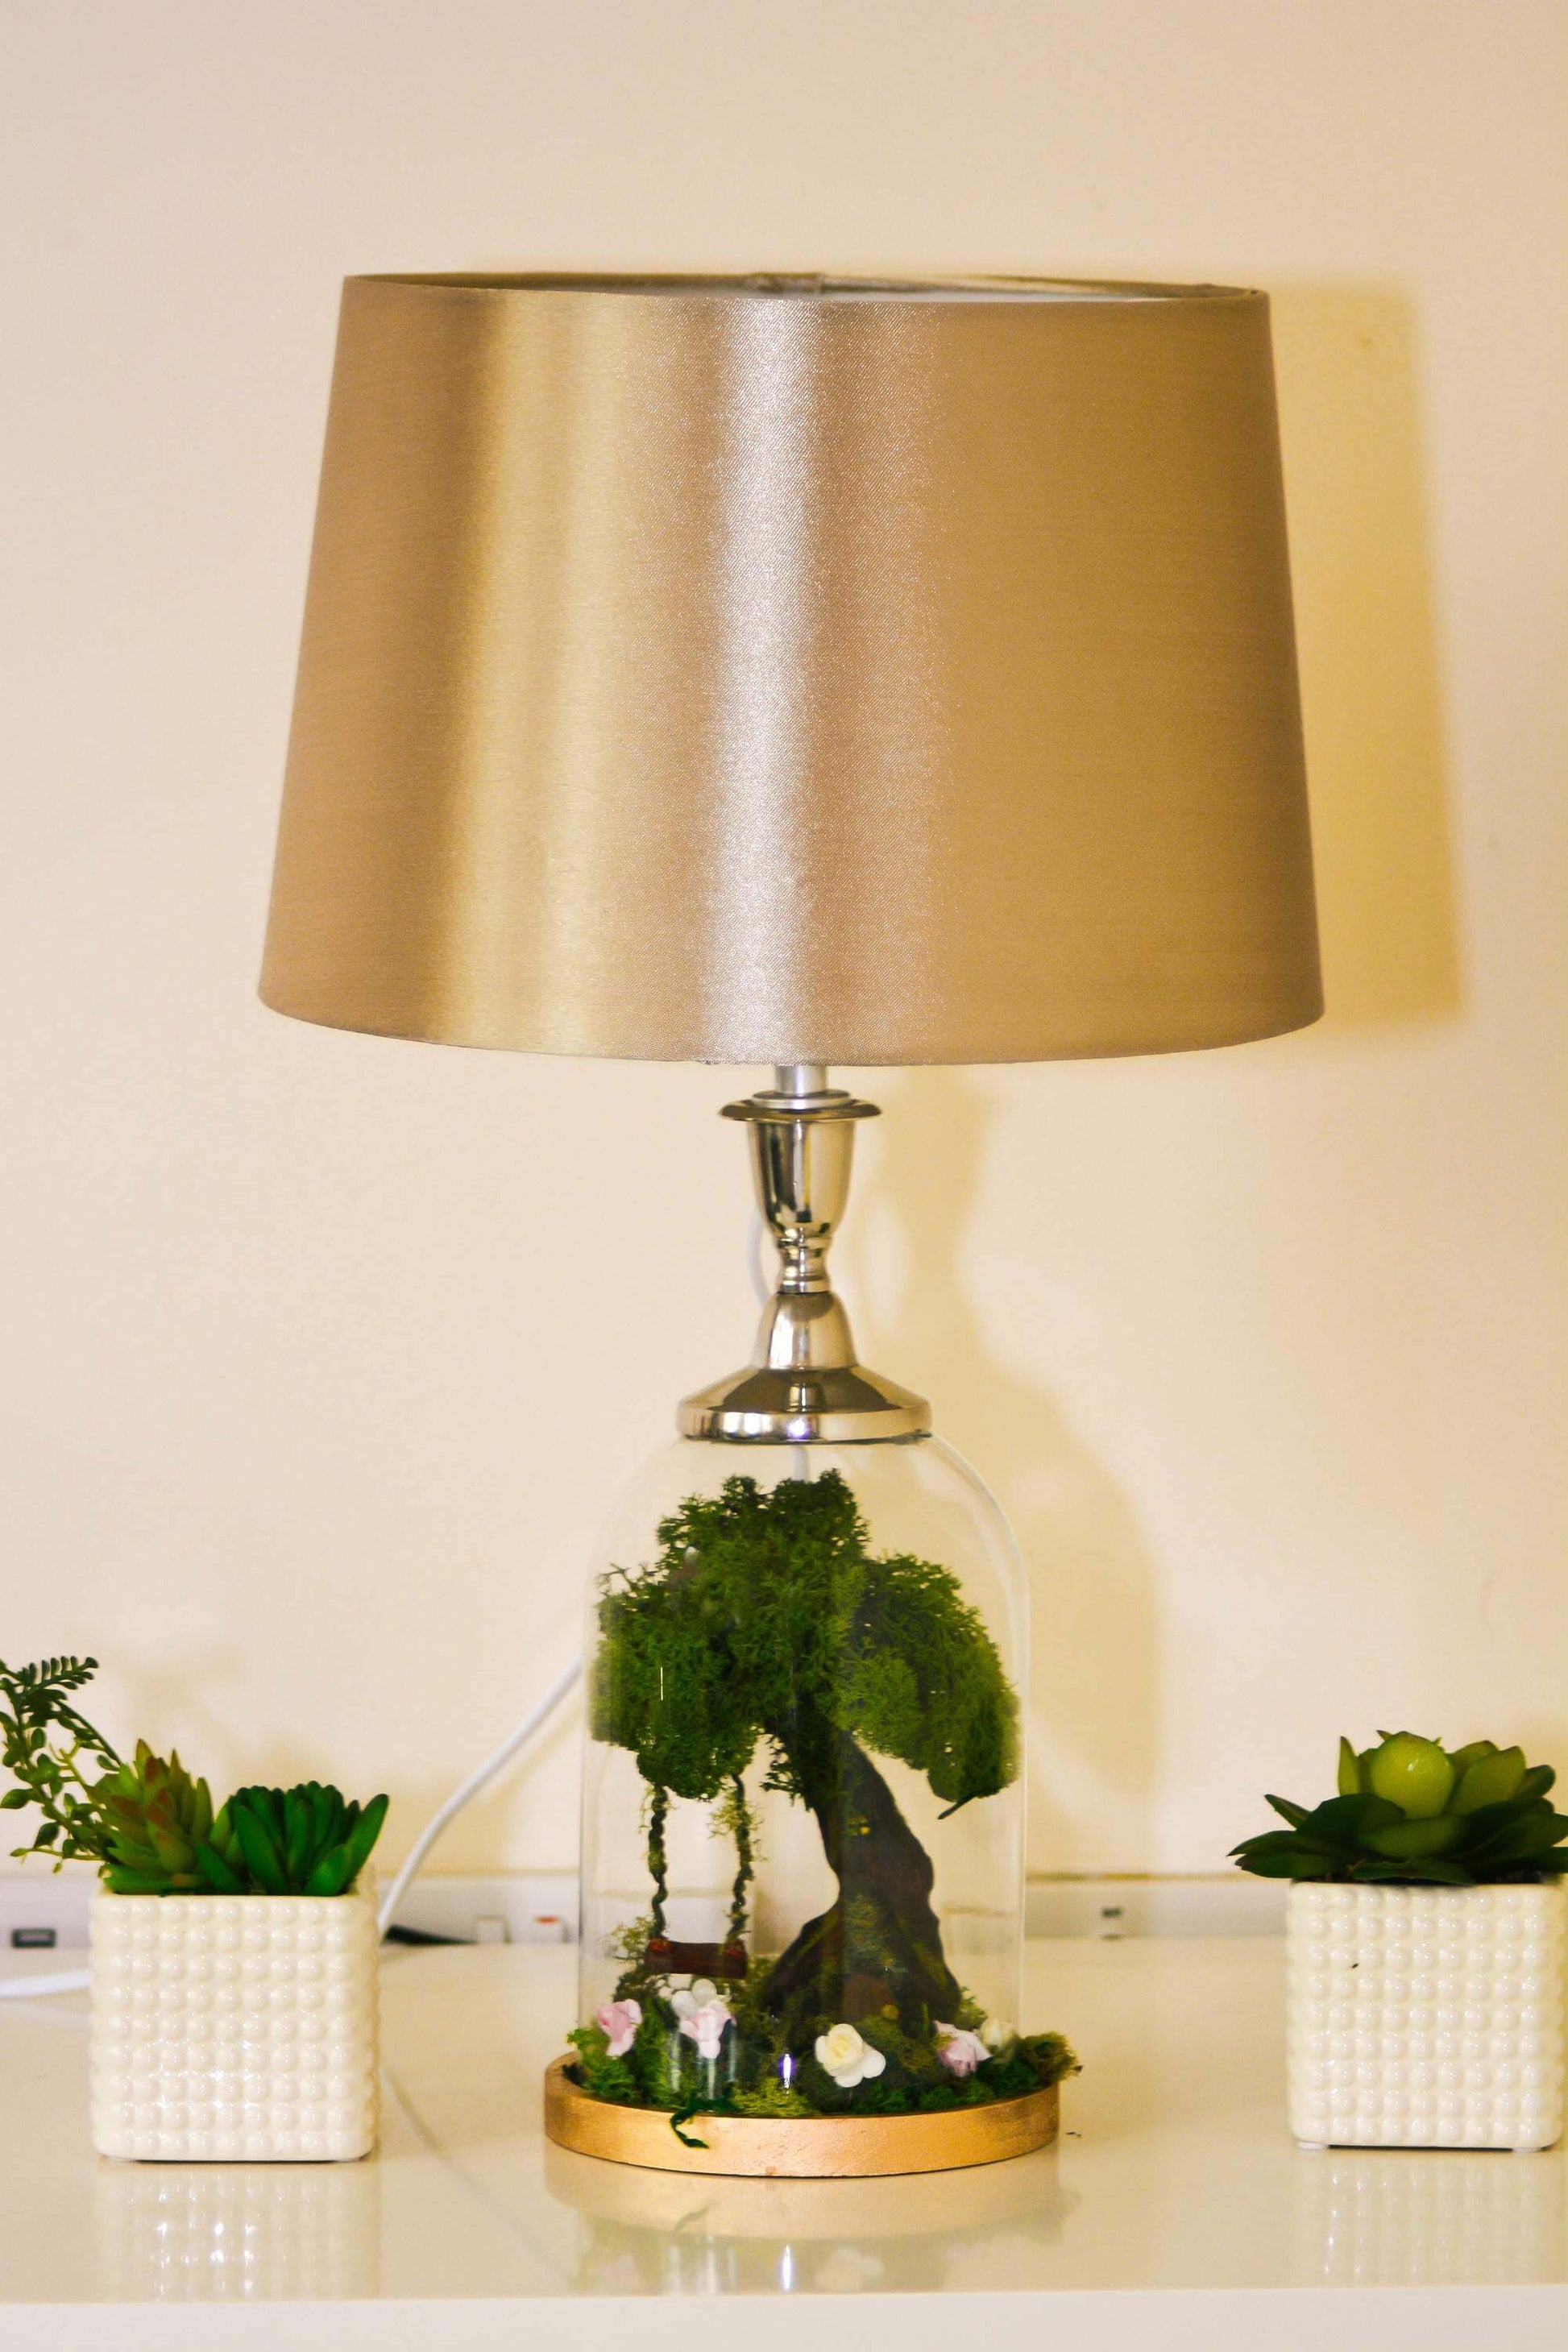 Rustic Table Lamp | Fairy Garden Table Light | Desk Lamp RishStudio